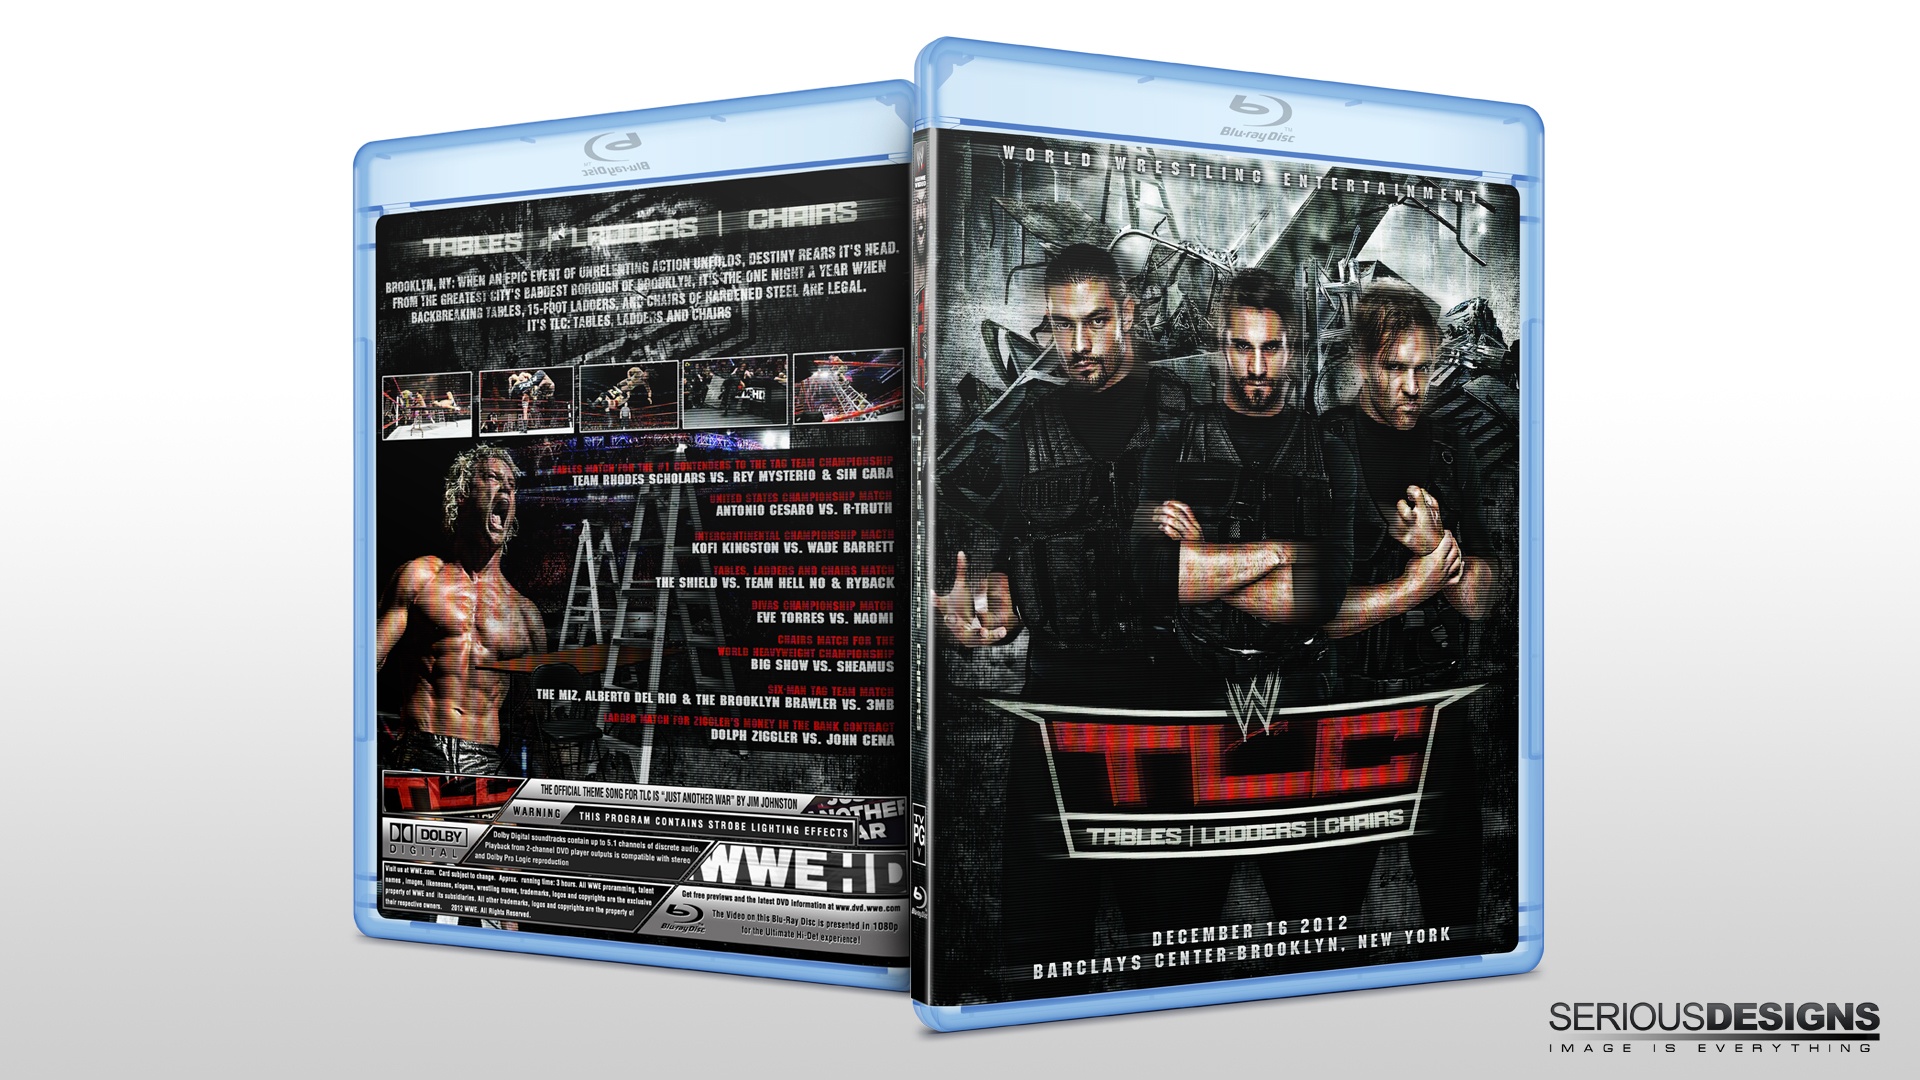 WWE TLC 2012 box cover